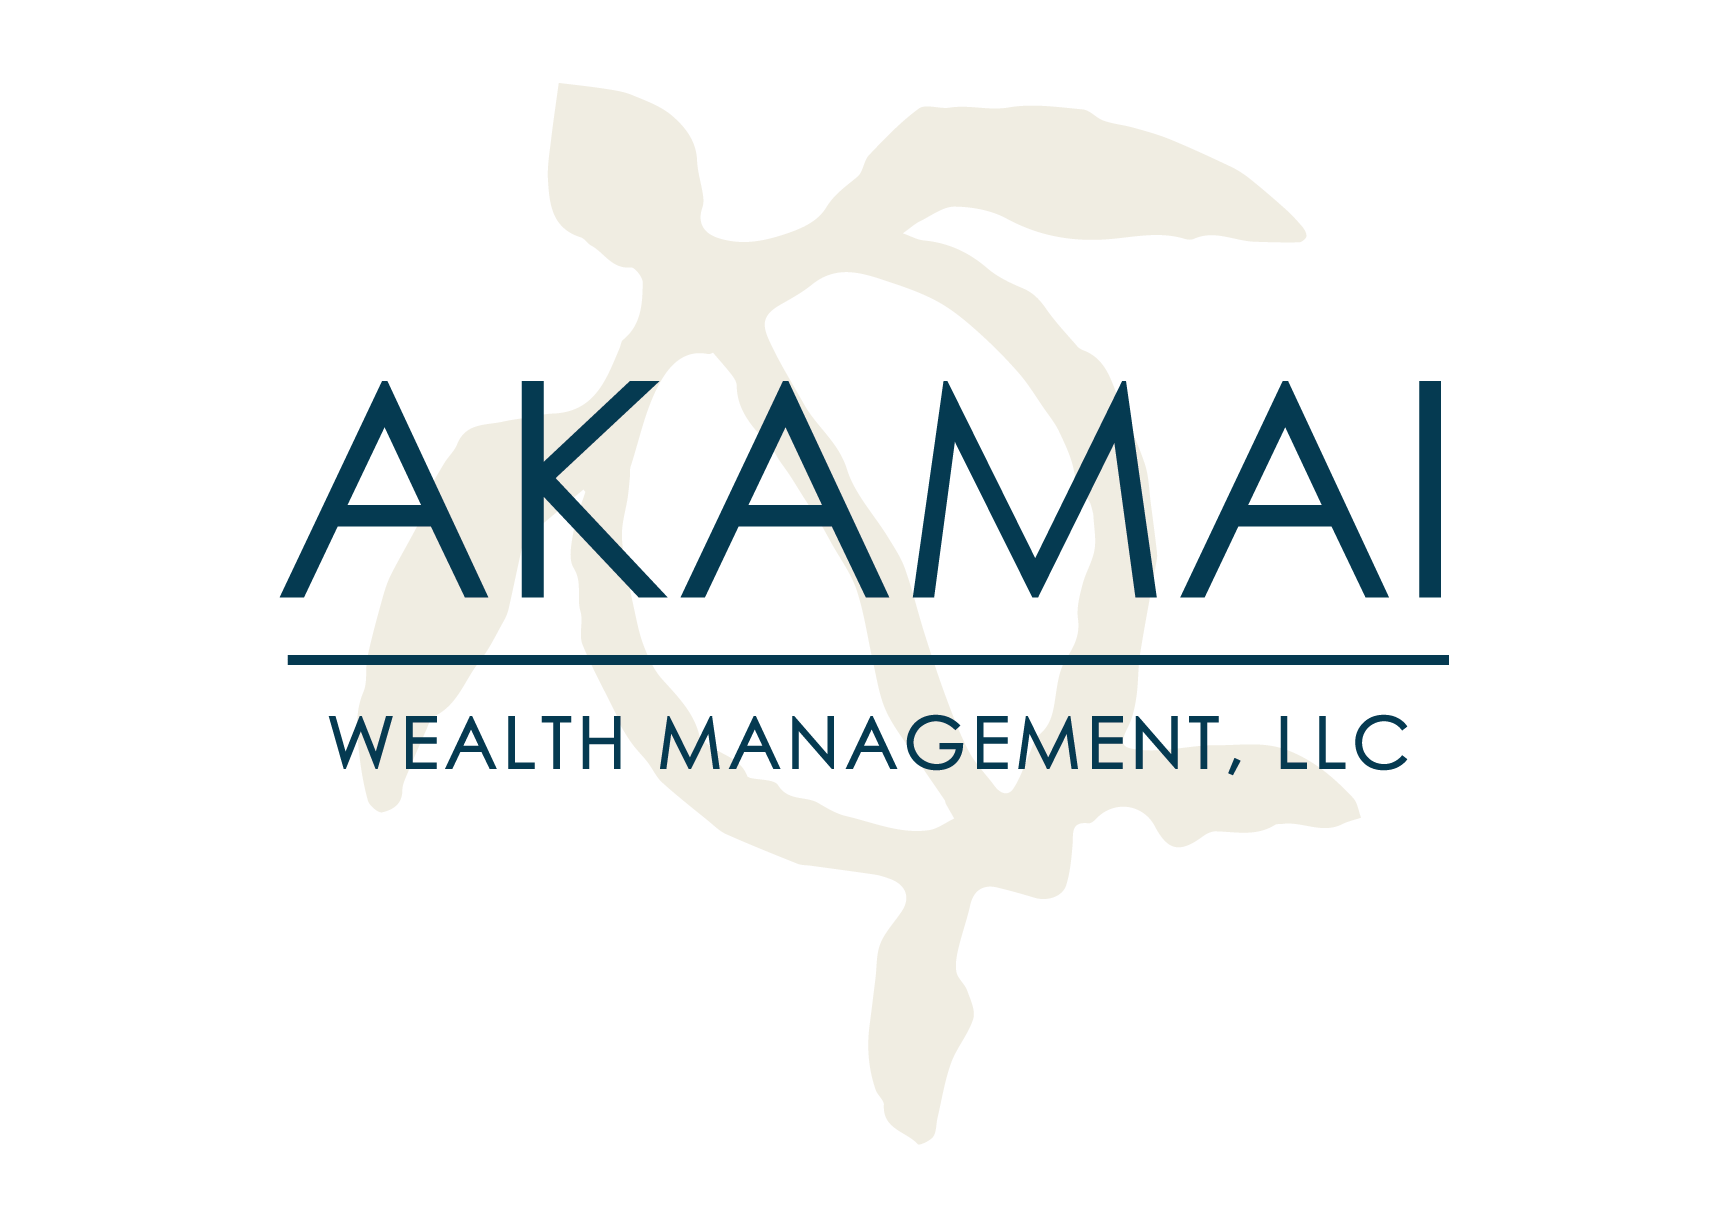 Akamai Wealth Management, LLC